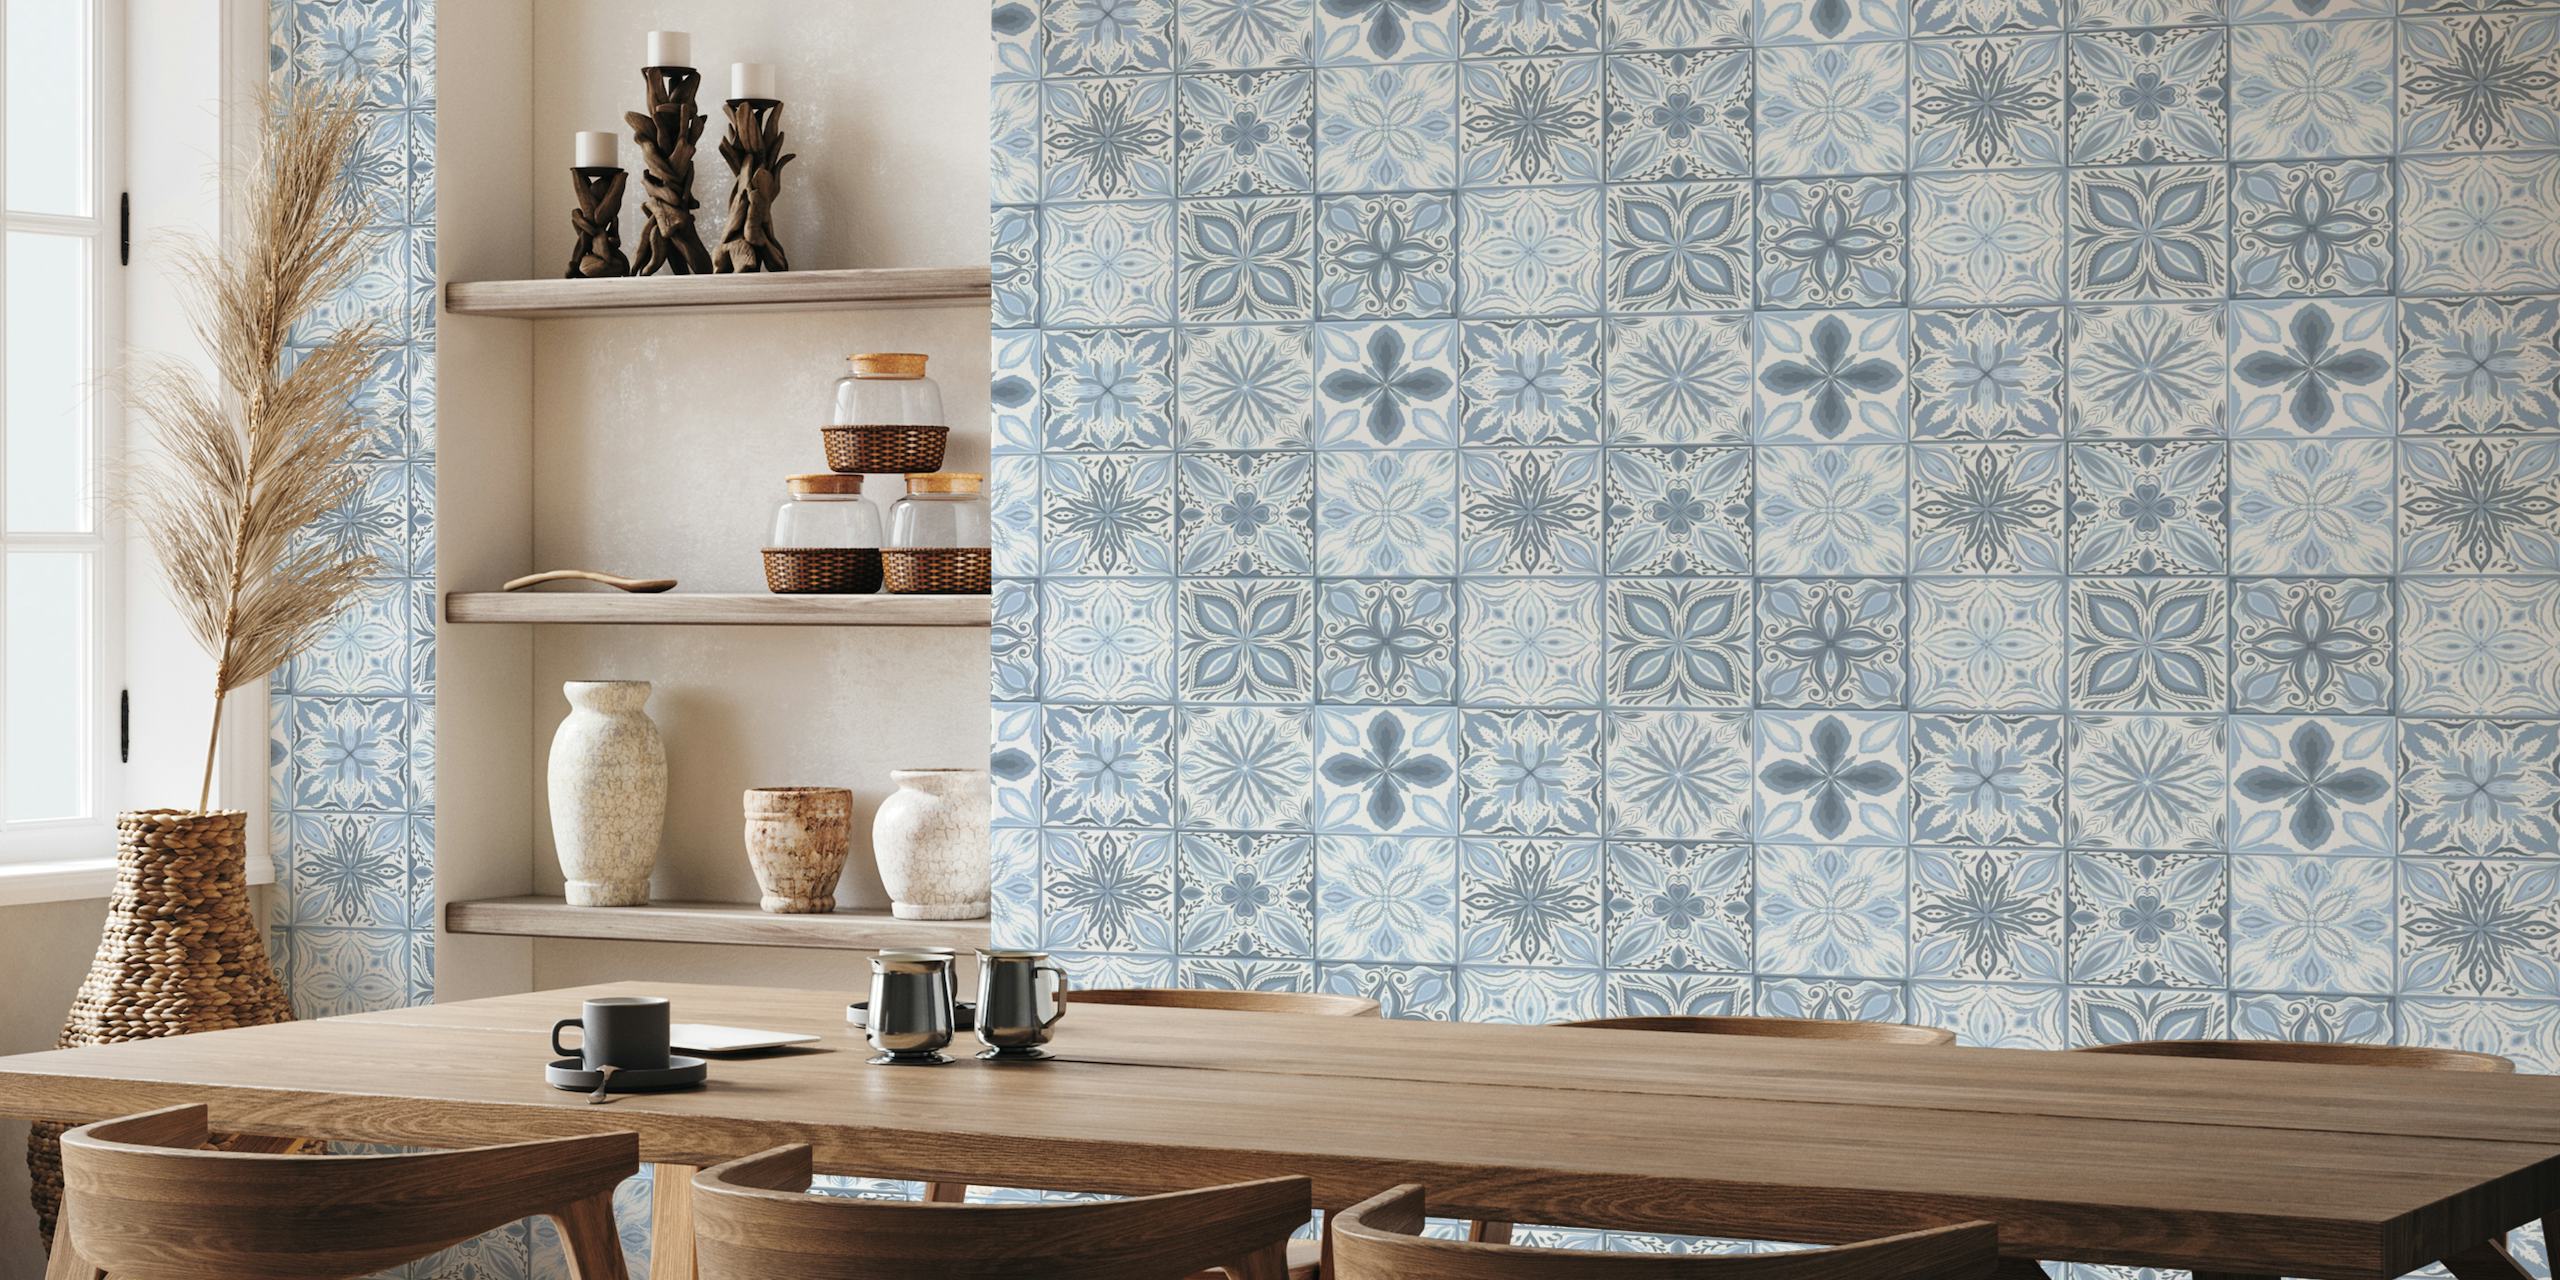 Ornate tiles, neutral blues wallpaper